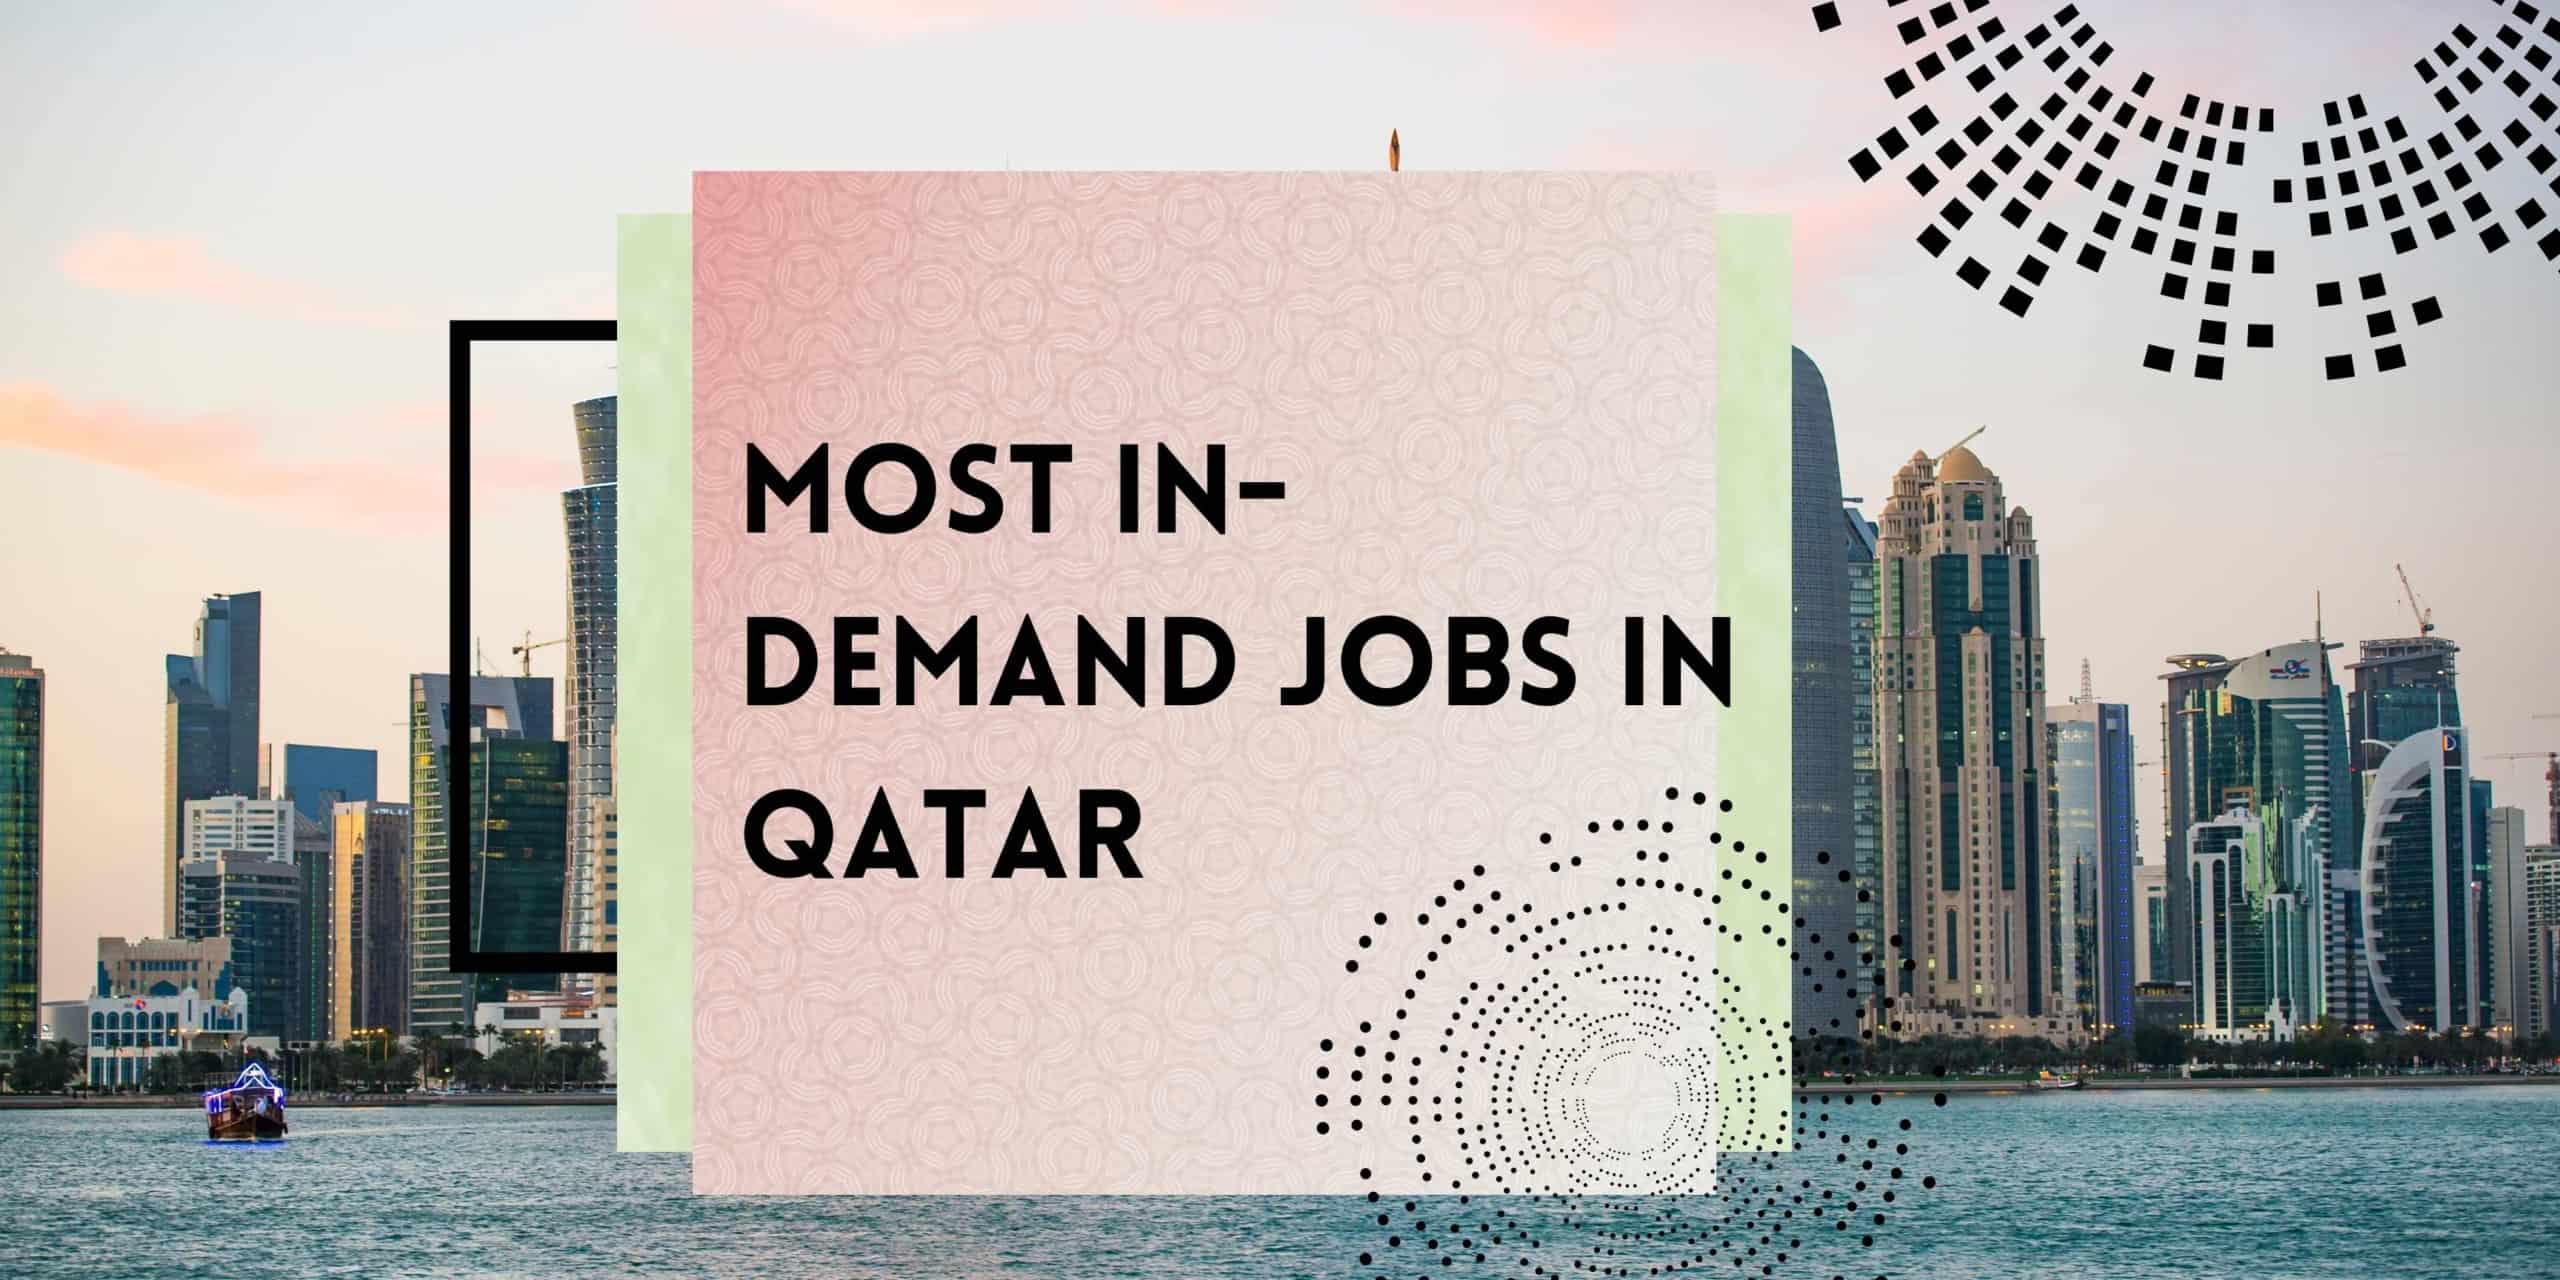 Most in-demand jobs in Qatar